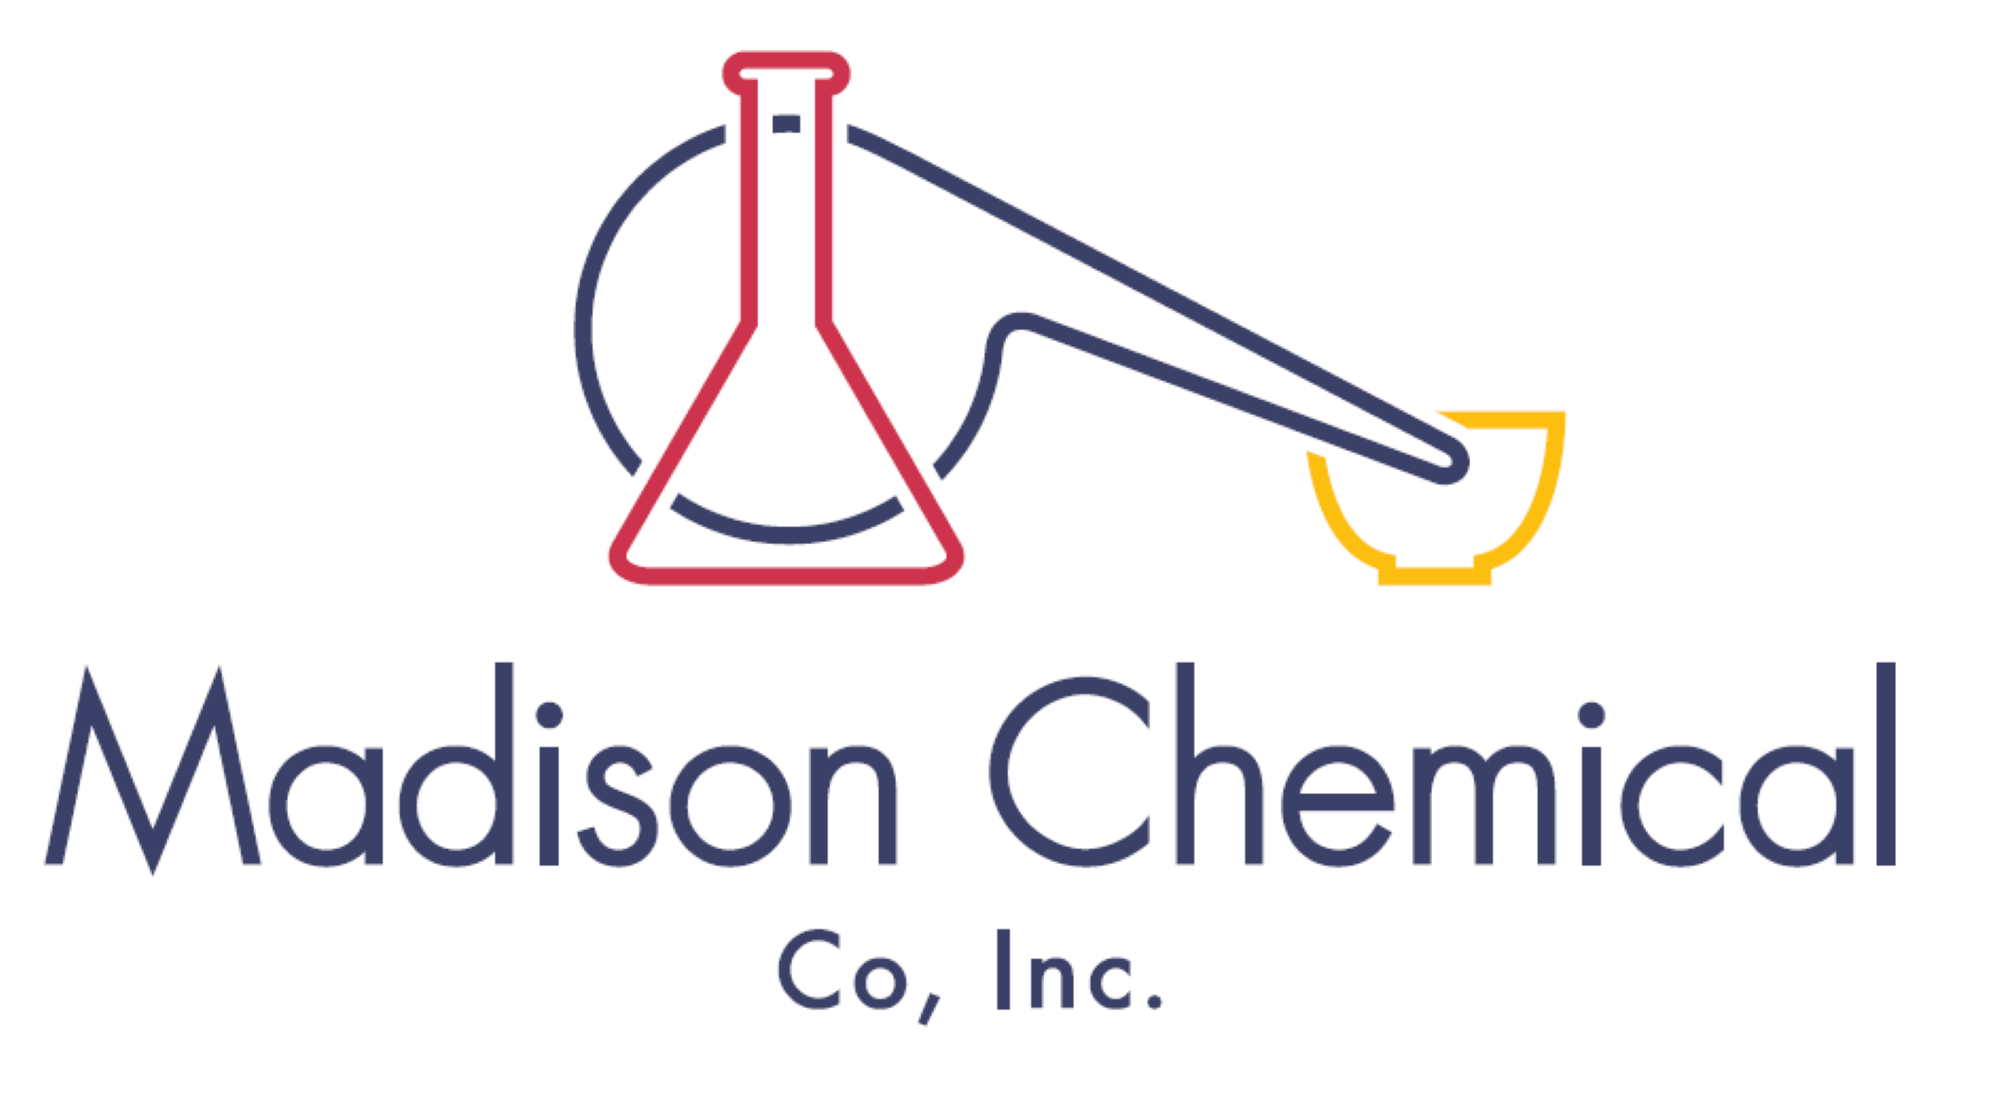 Madison Chemical